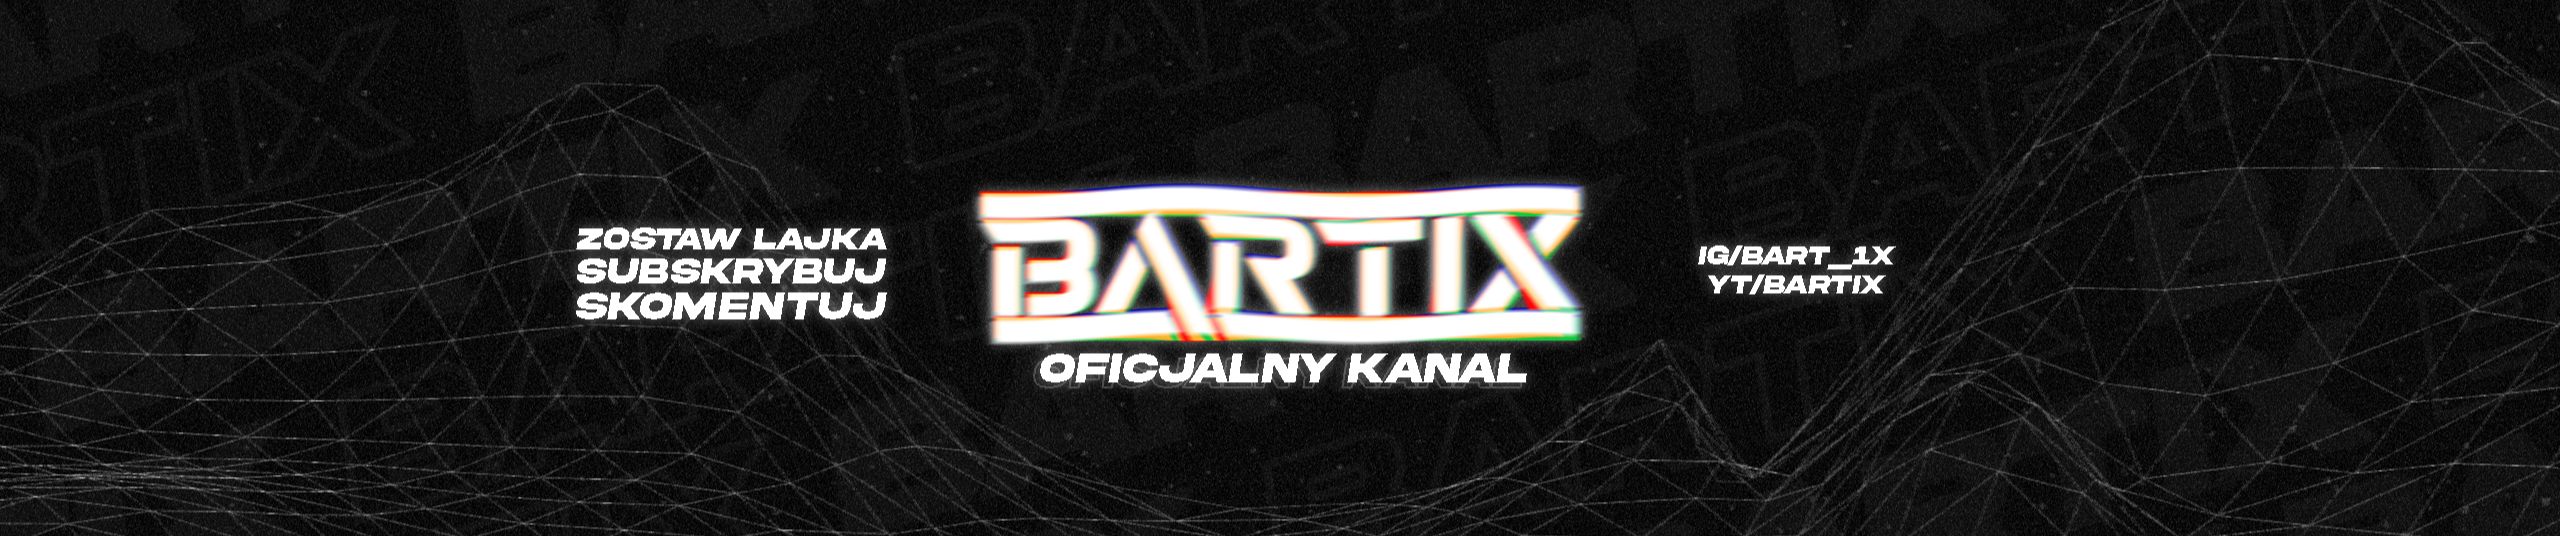 Stream Garcia - Bamboleo (BARTIX & WAFES REMIX) 130BPM by BARTIX | Listen  online for free on SoundCloud